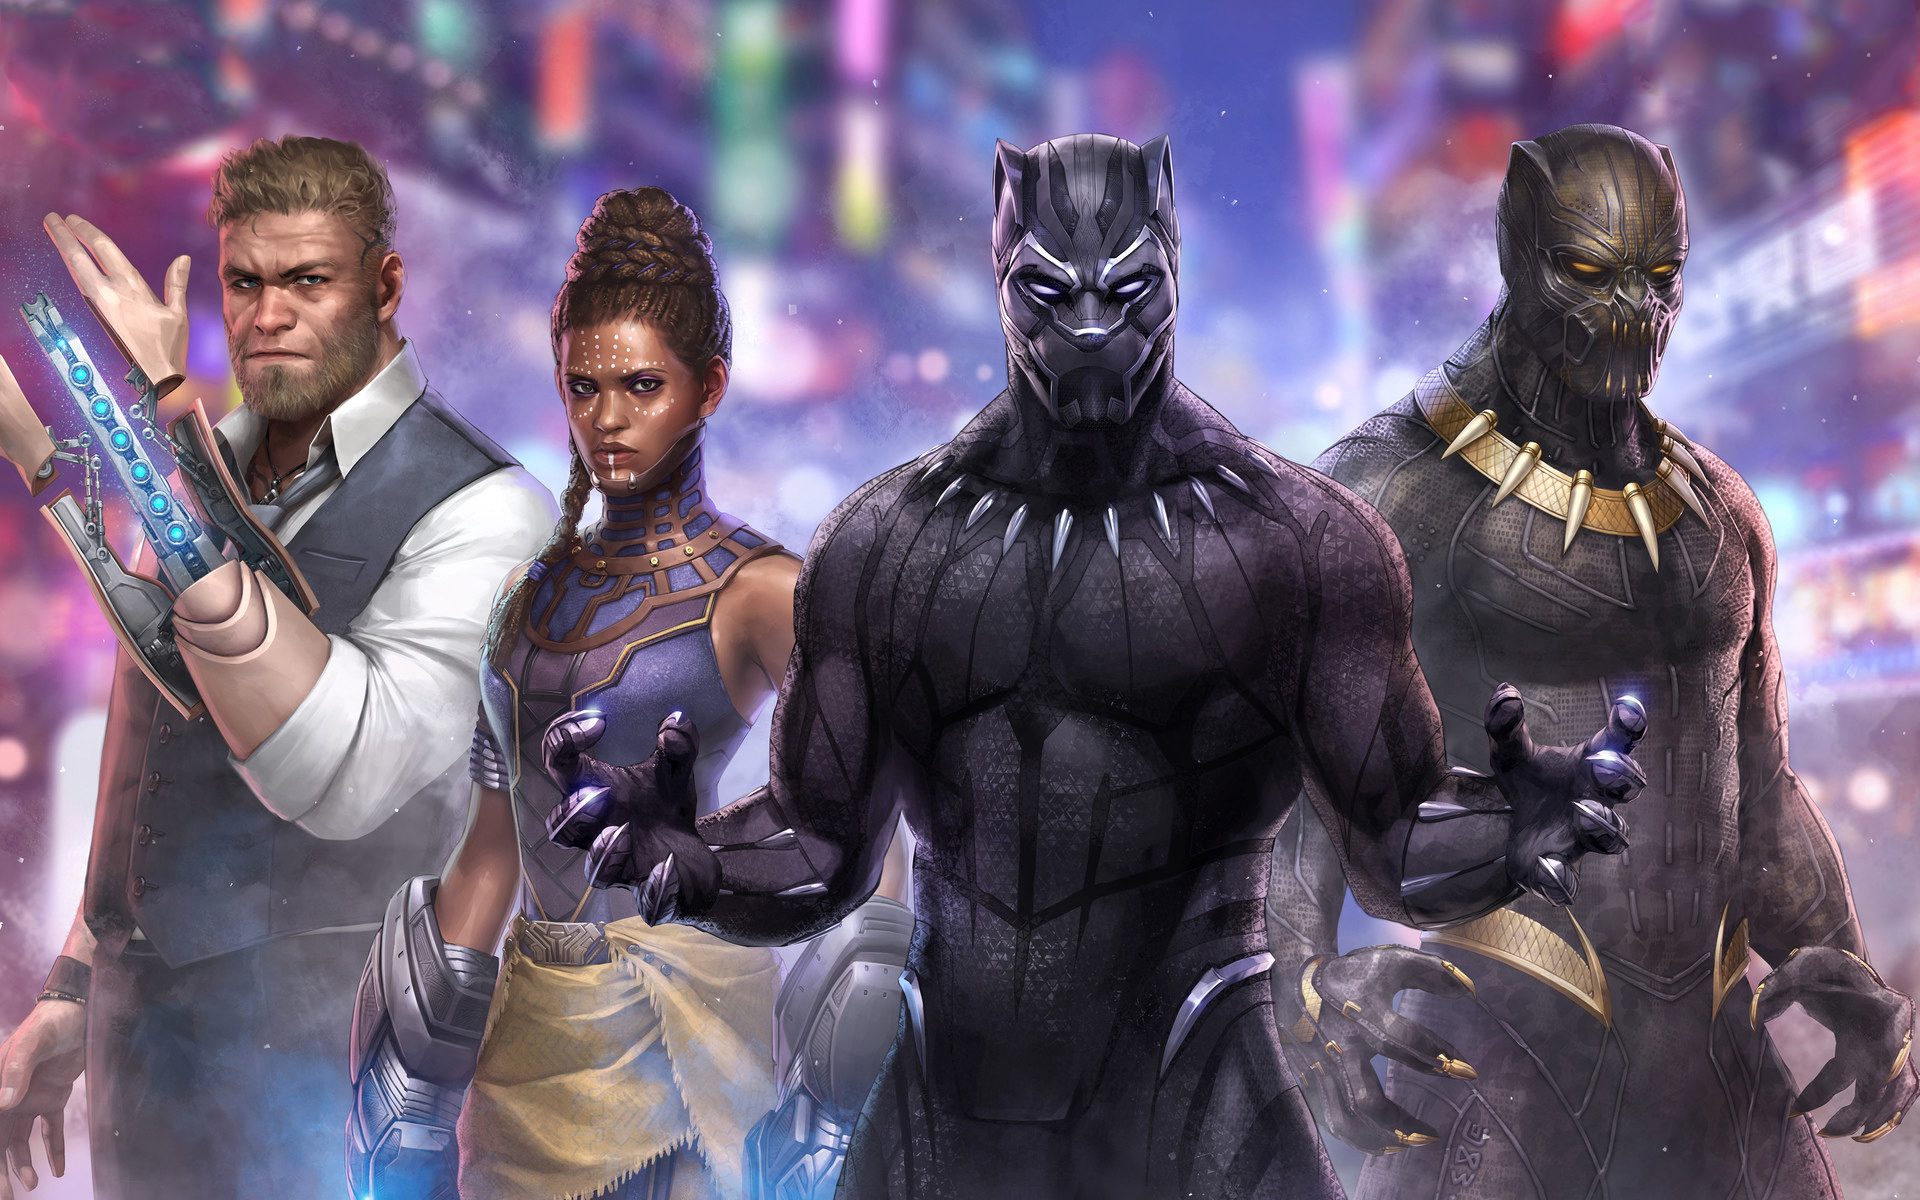 Black Panther Marvel Future Fight Artwork2564014106 - Black Panther Marvel Future Fight Artwork - The, Panther, Marvel, Future, Fight, Black, Artwork